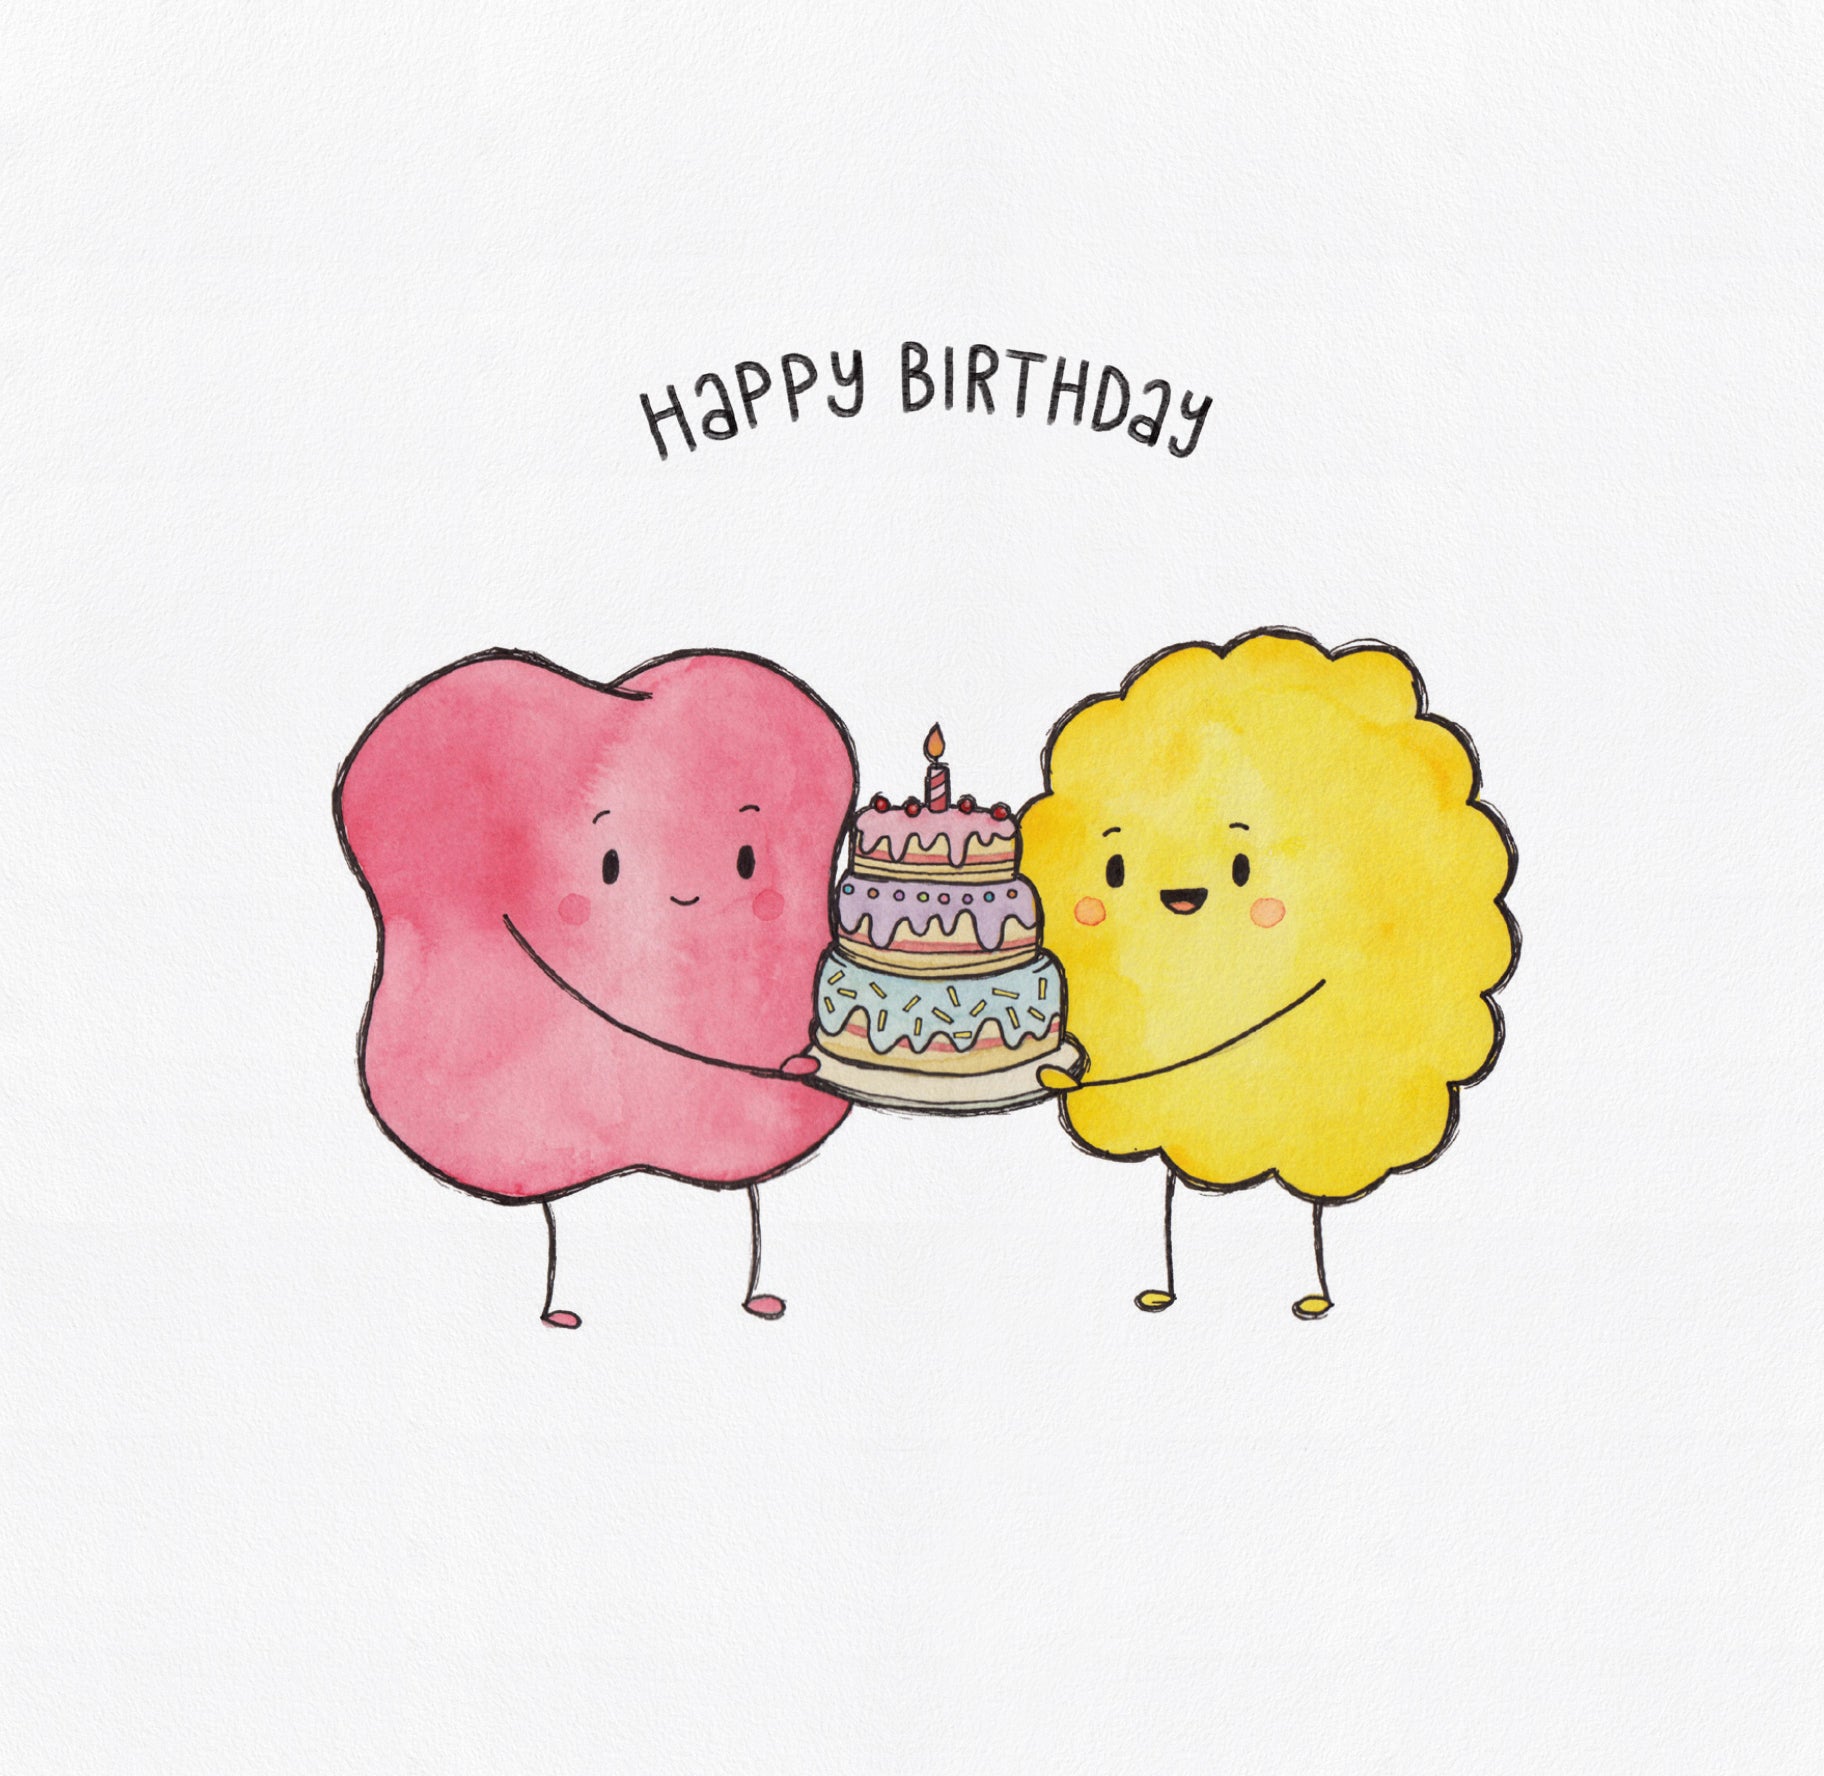 Happy Birthday Card - The Kiss Co